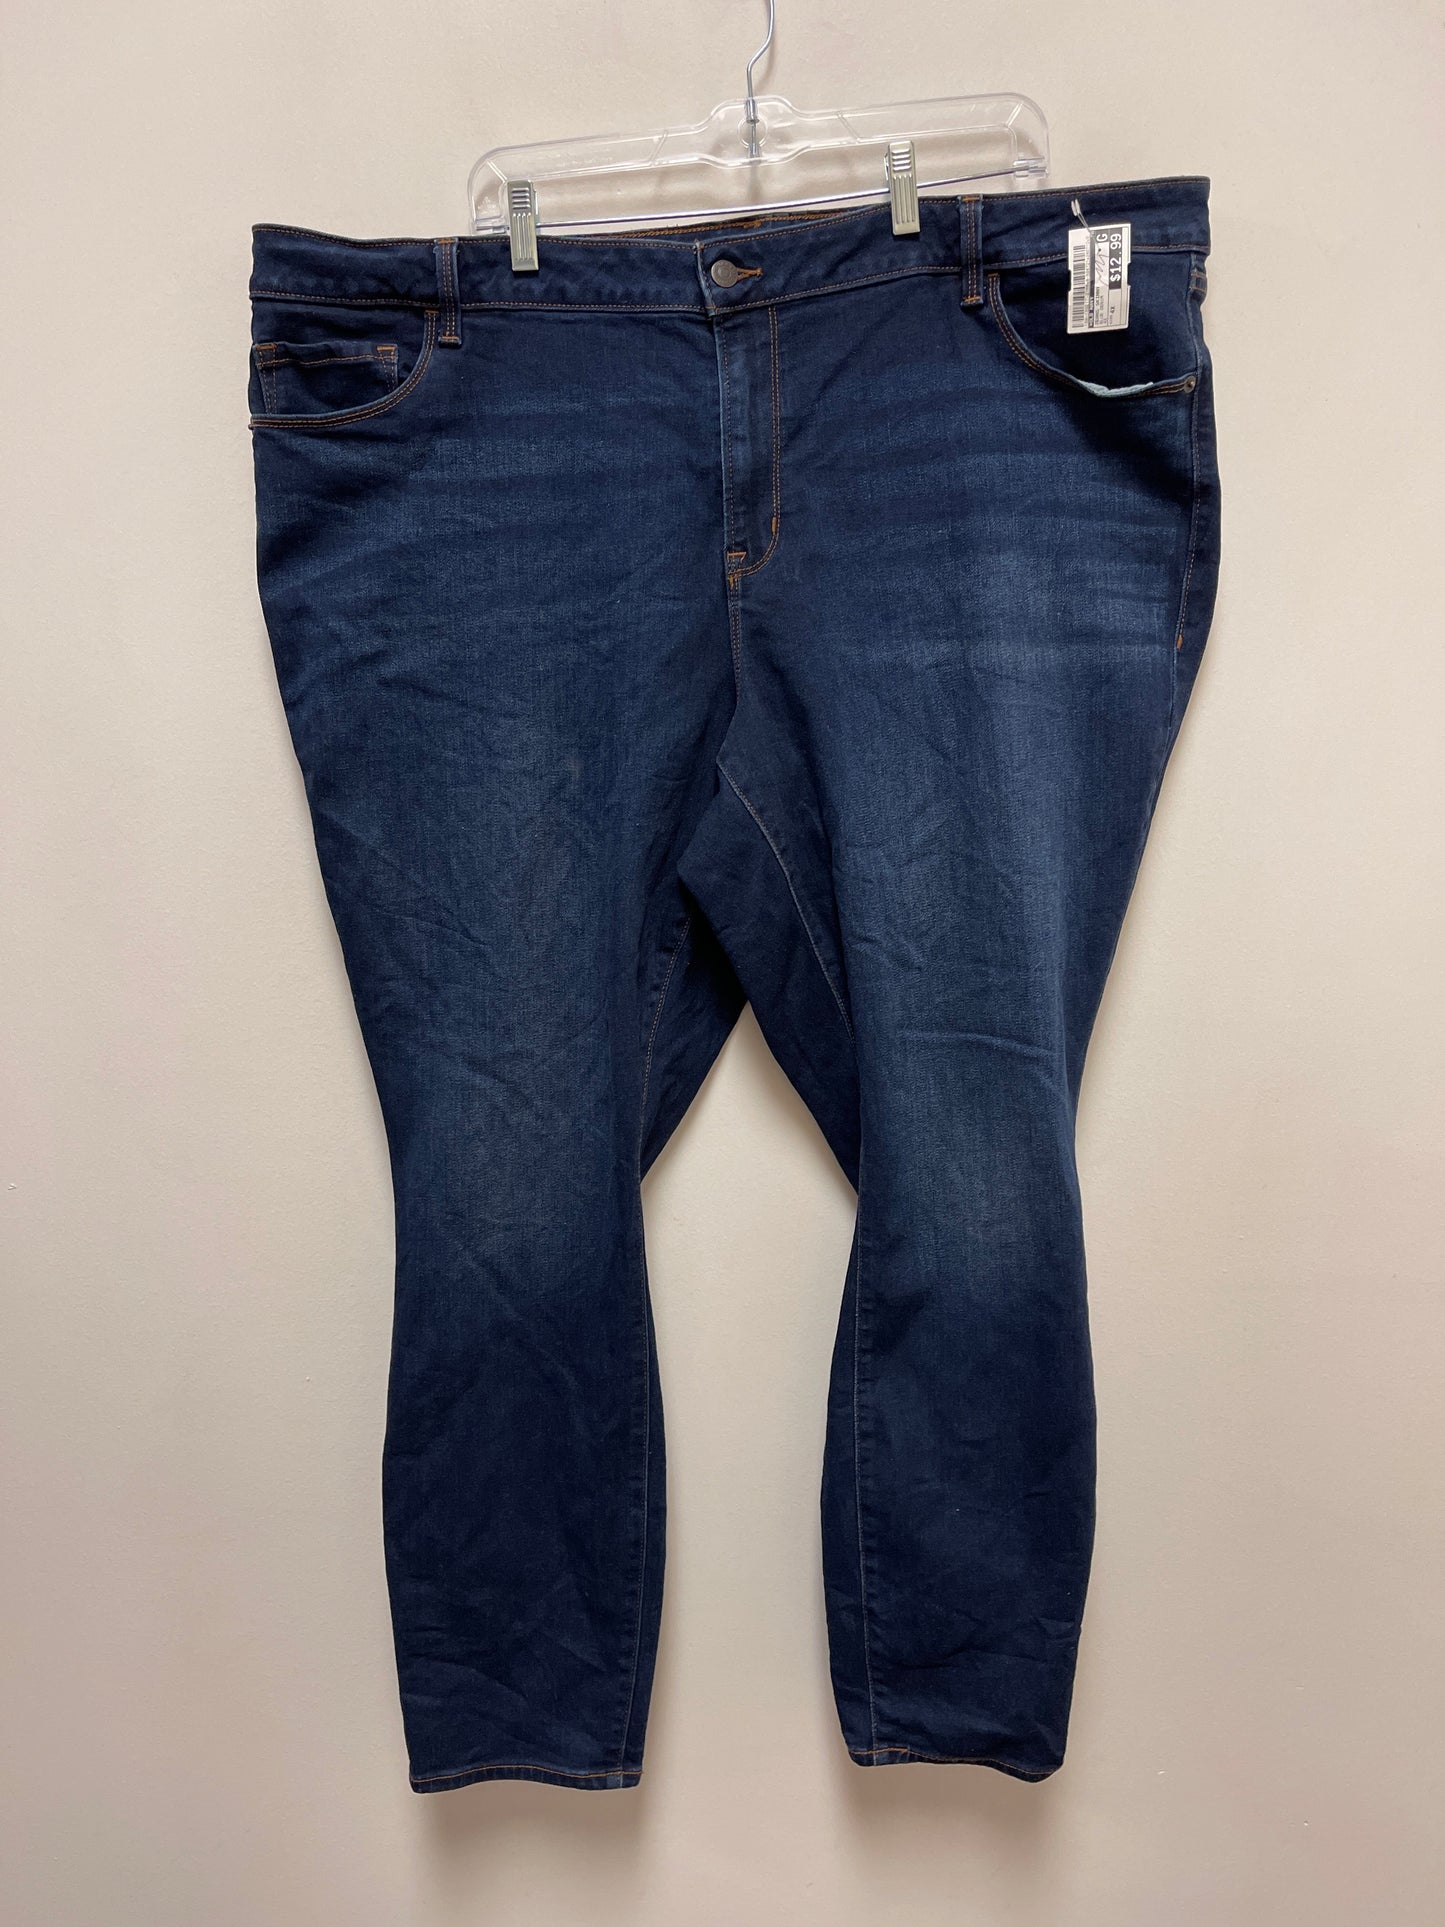 Blue Denim Jeans Skinny Old Navy, Size 4x